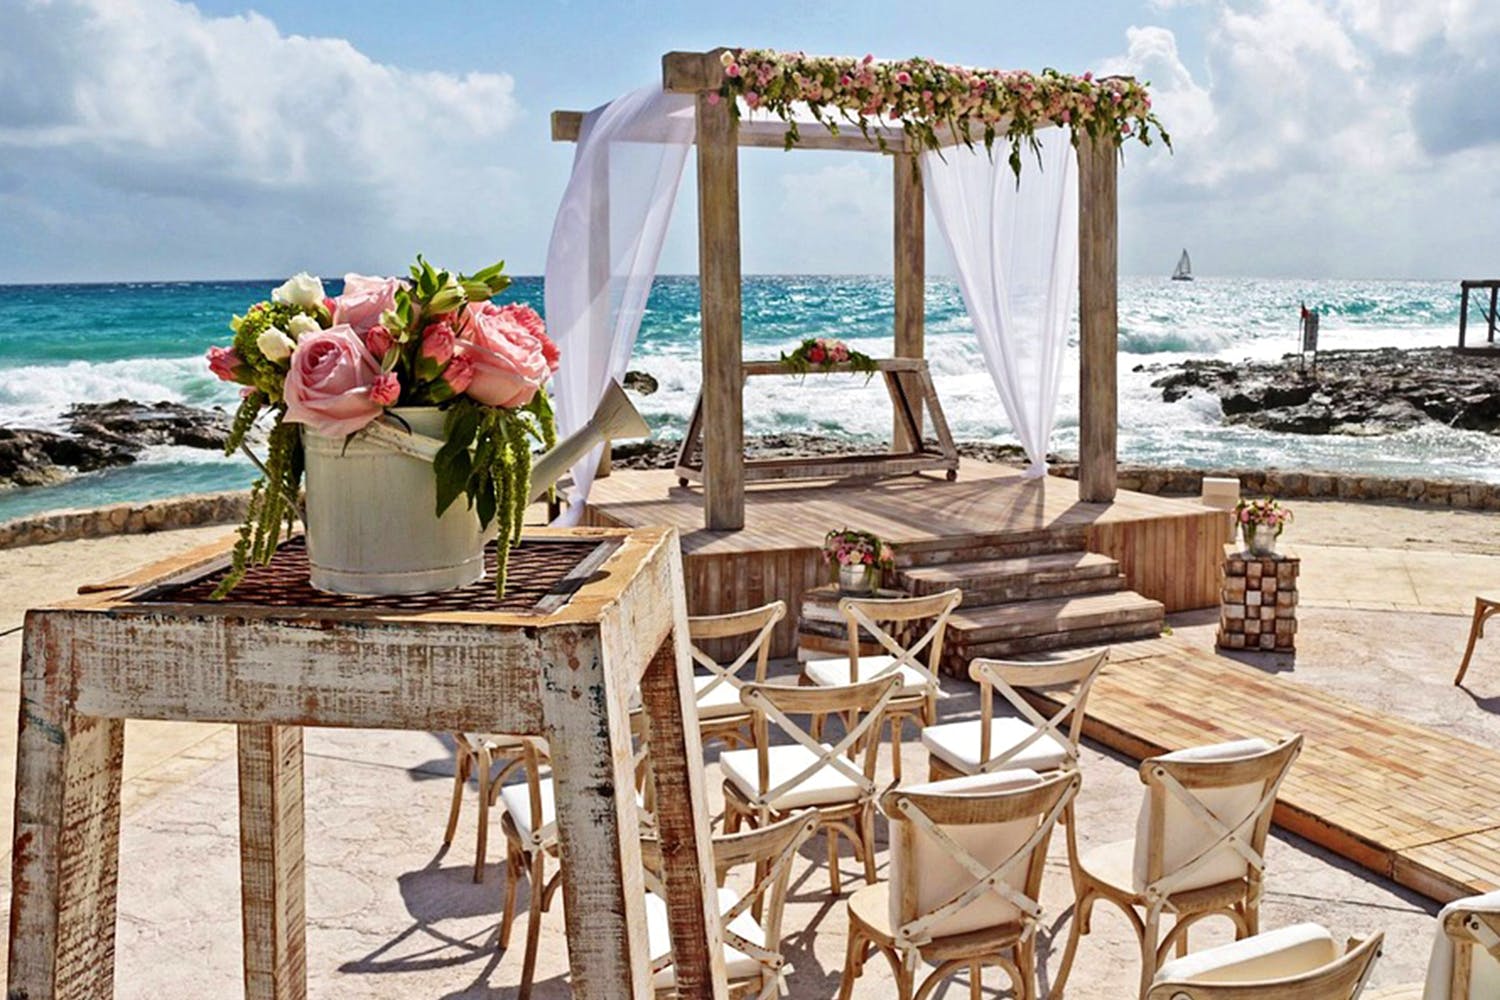 Furniture,Table,Vacation,Room,Resort,Beach,Restaurant,Sea,Chair,Interior design